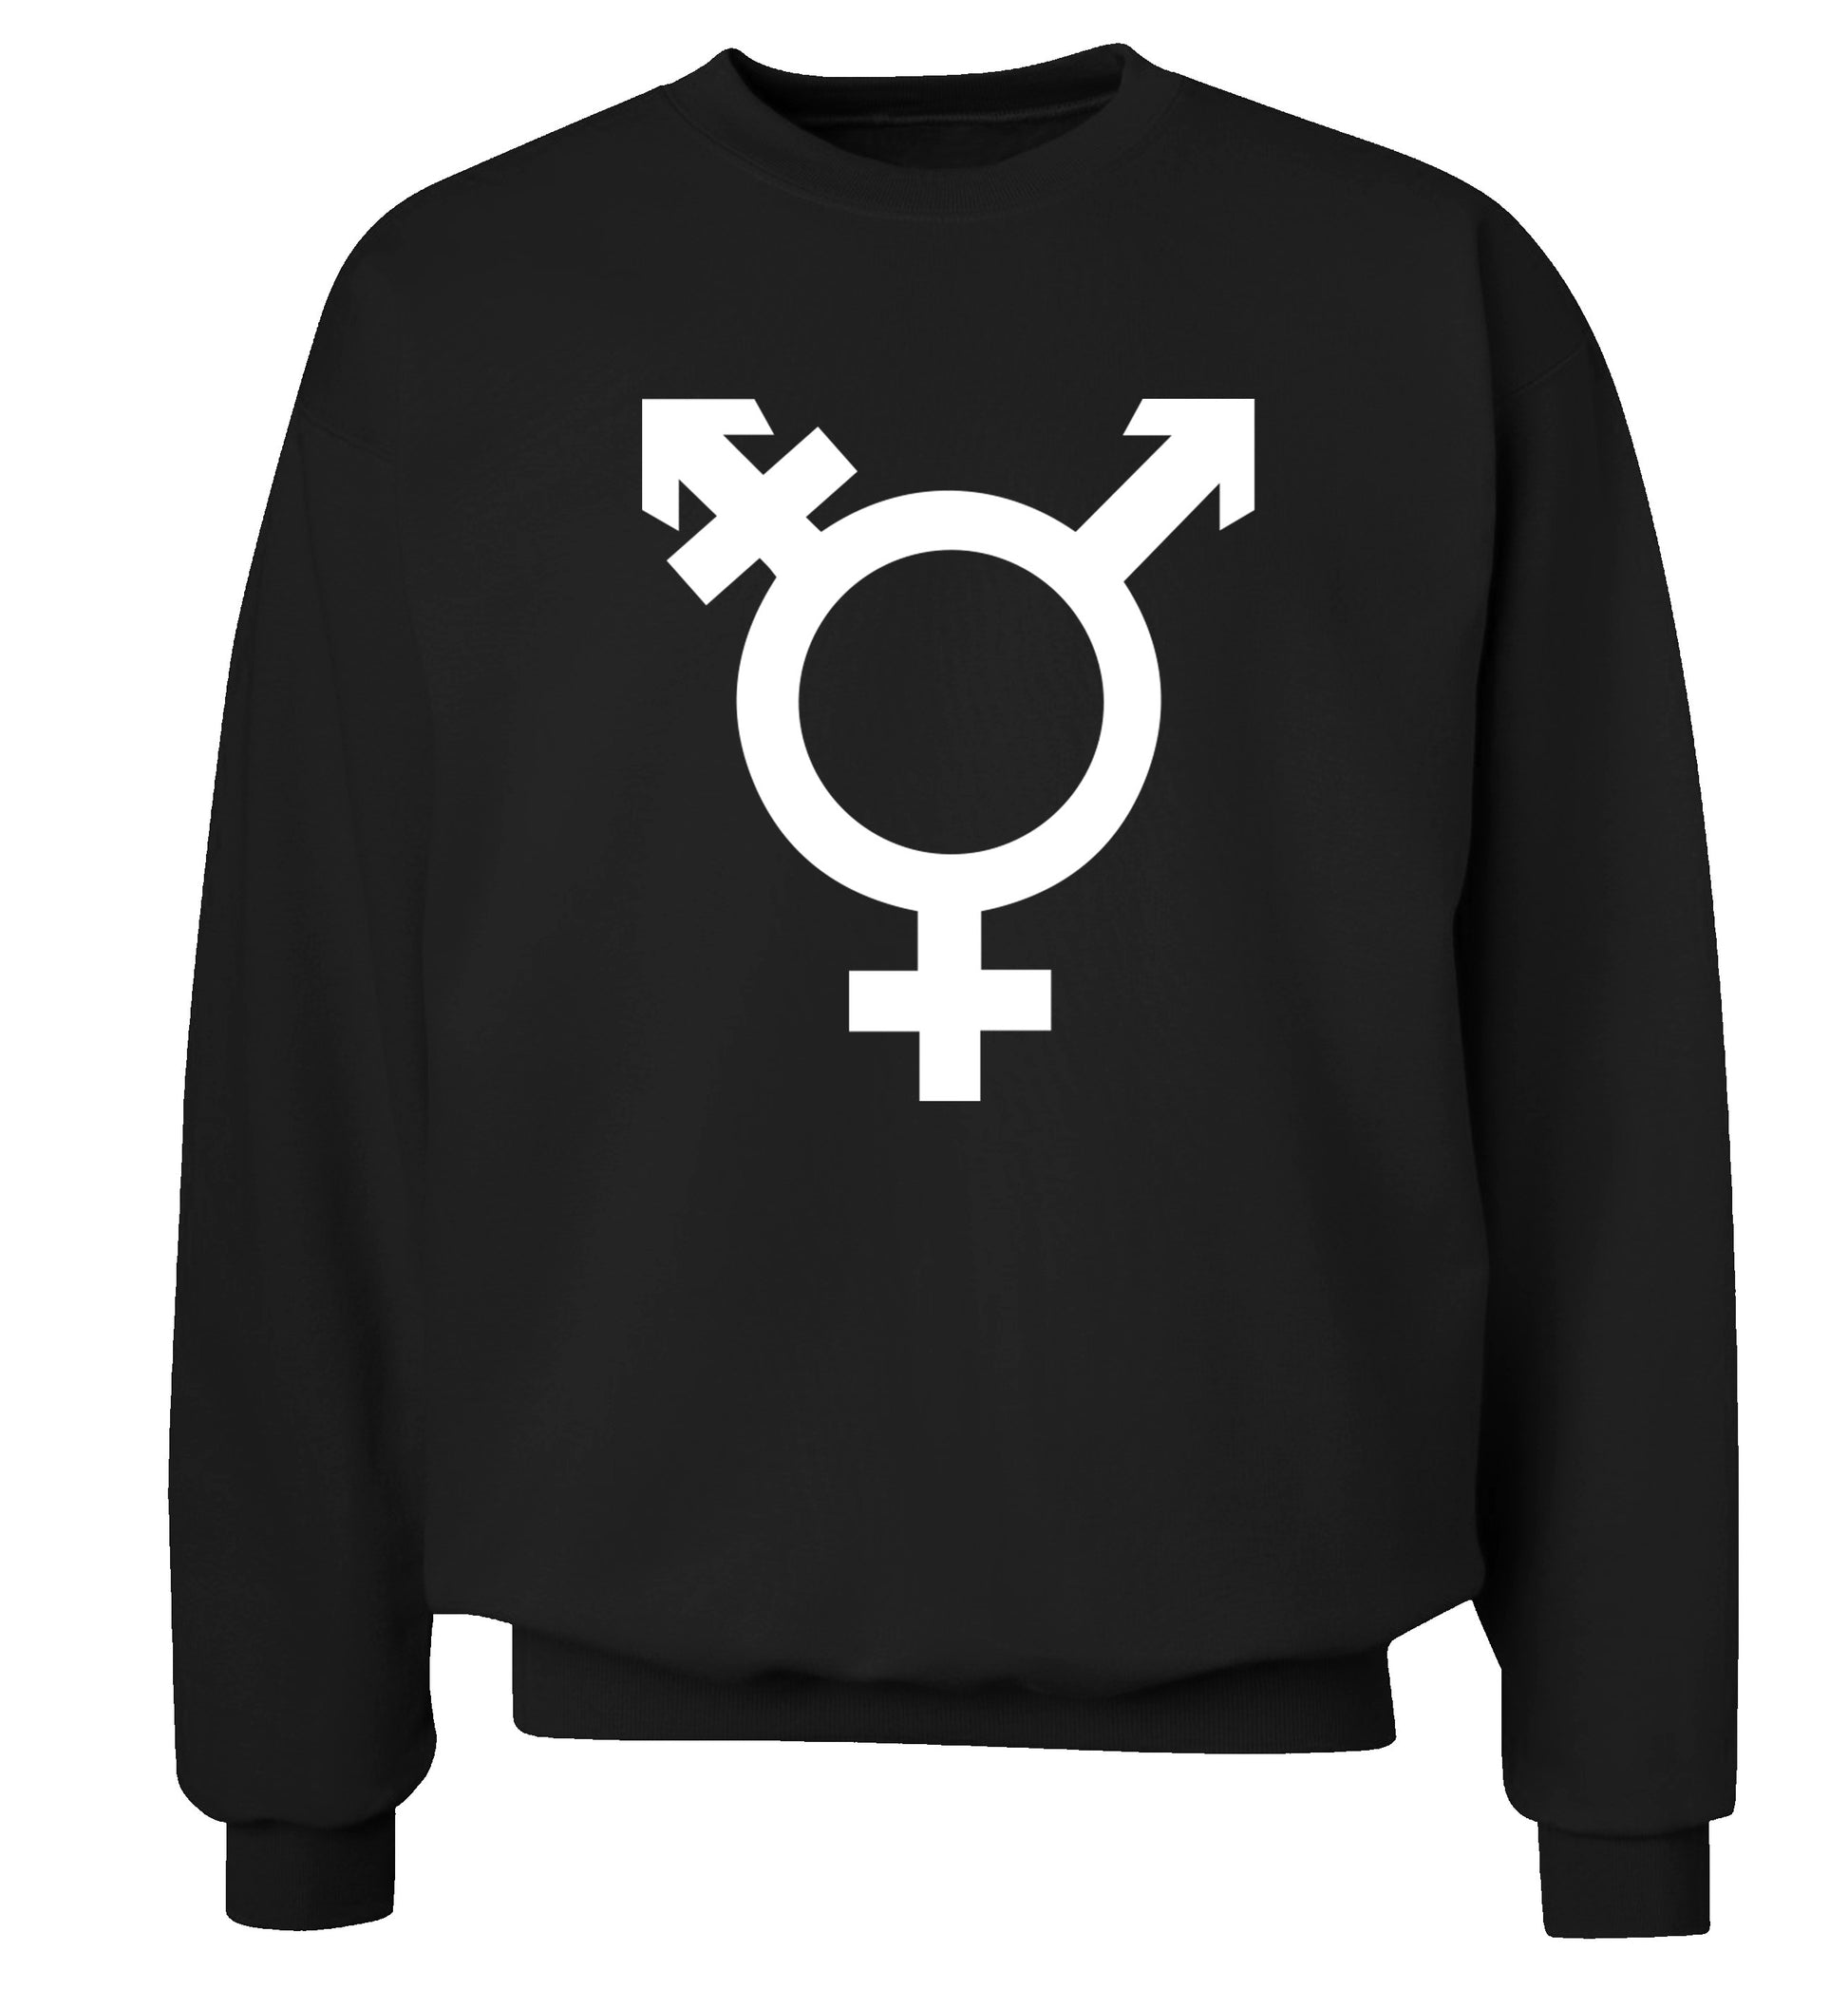 Gender neutral symbol large Adult's unisex black Sweater 2XL